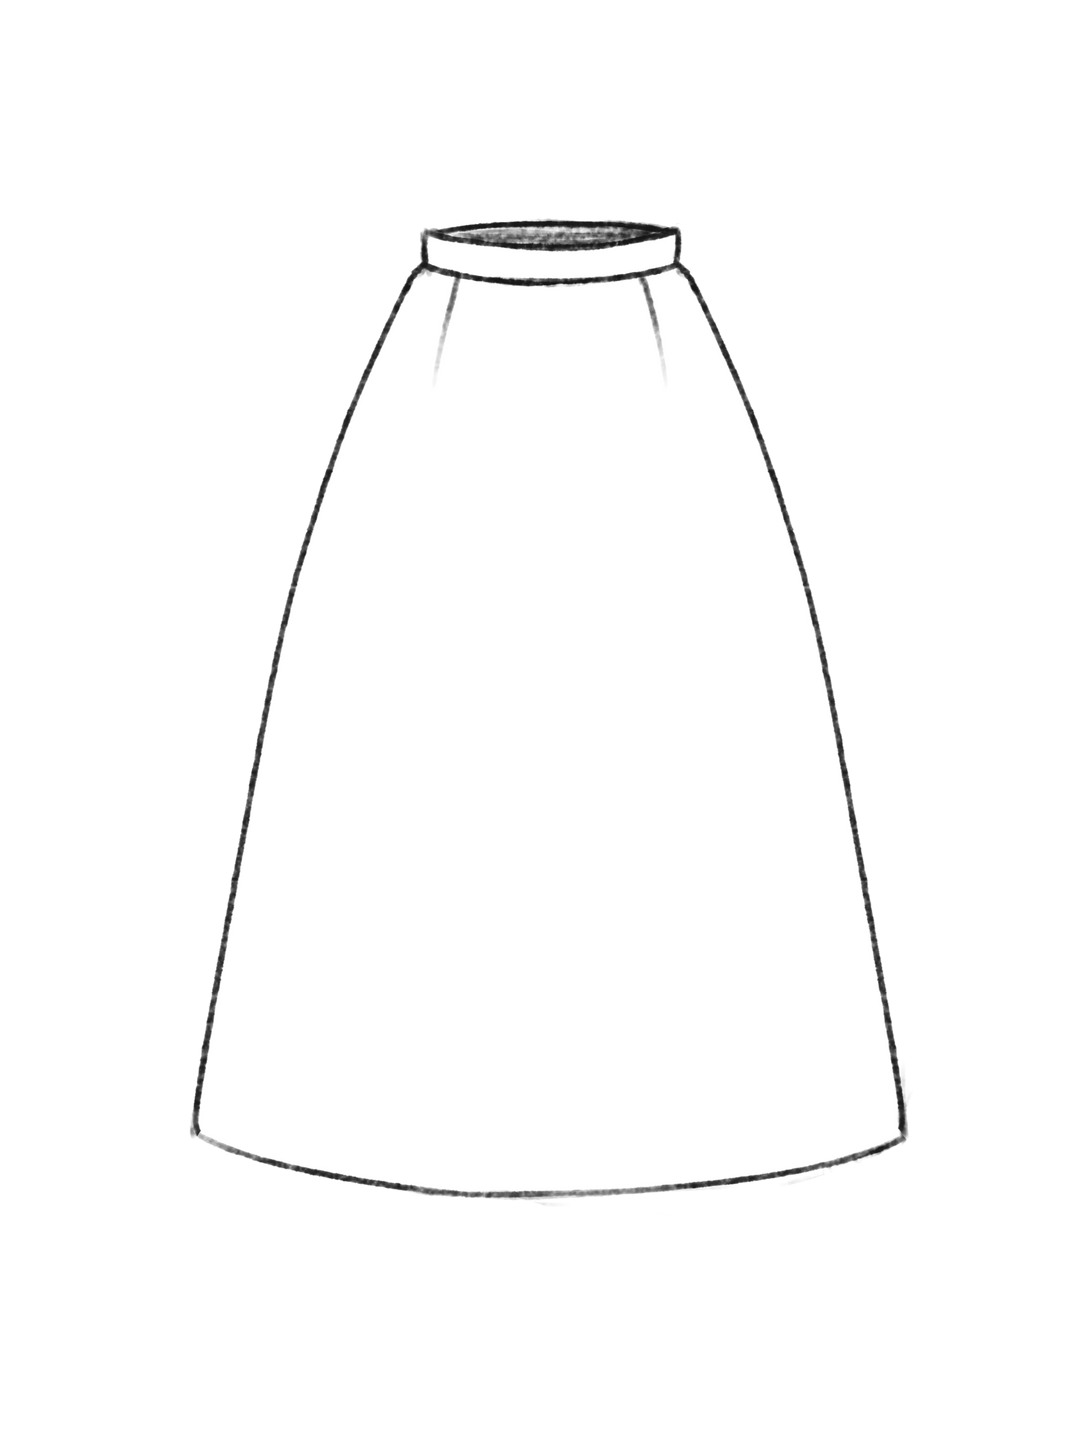 Choose a fabric: Turner Skirt